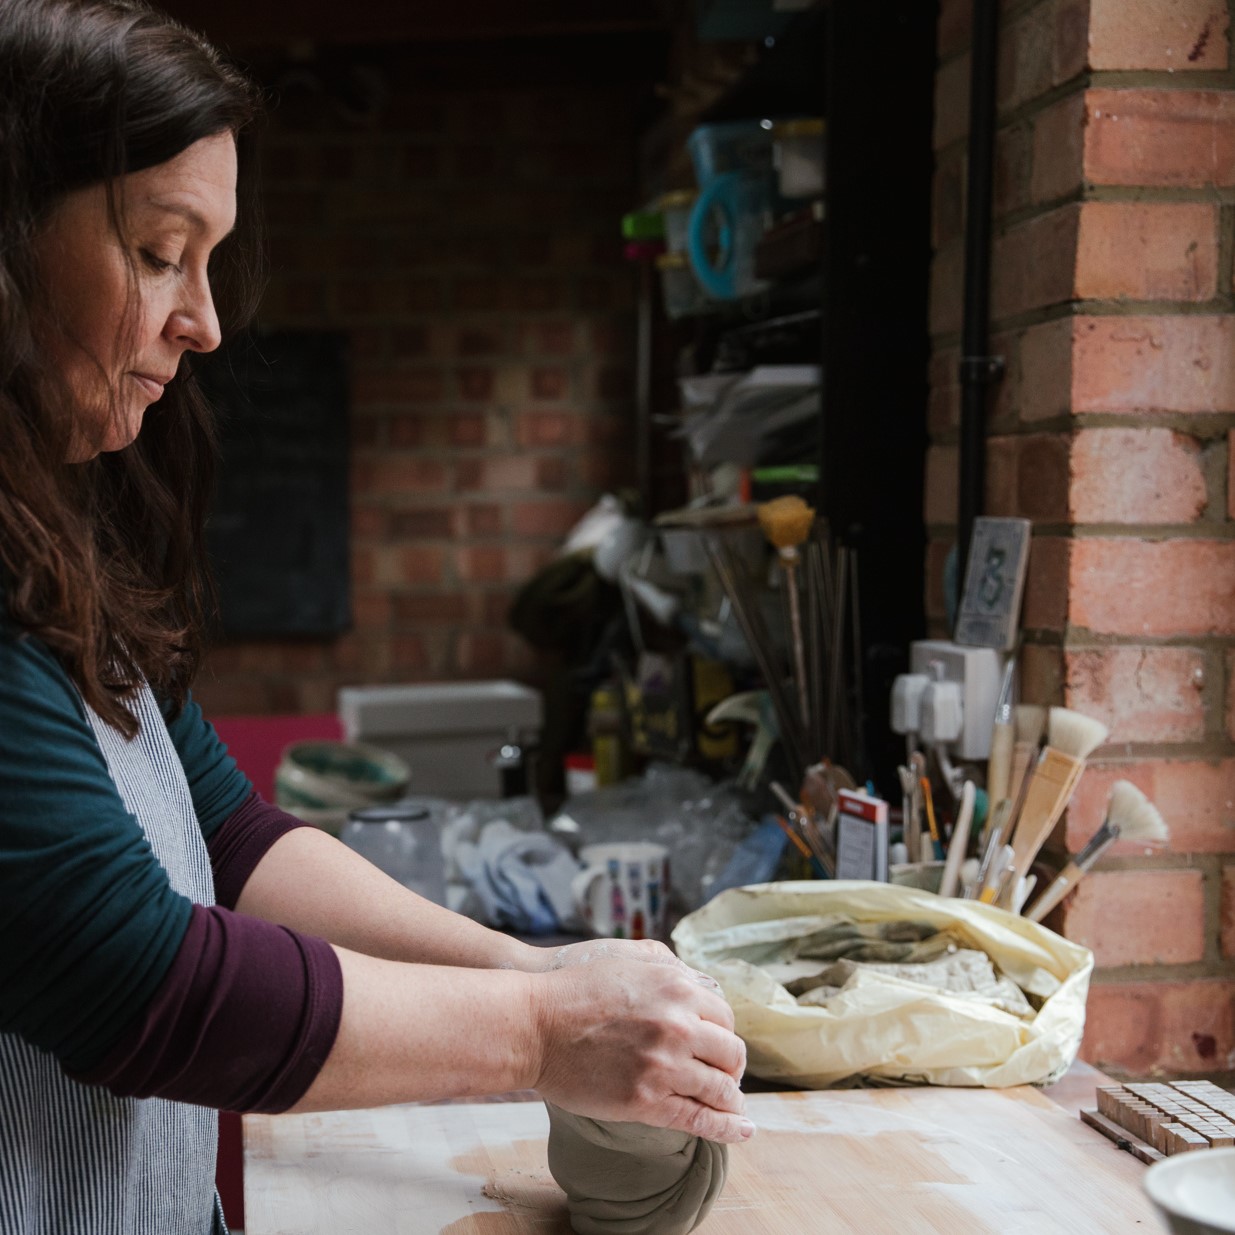 Lorna Gilbert Ceramics working in her pottery studio in Yorkshire, UK